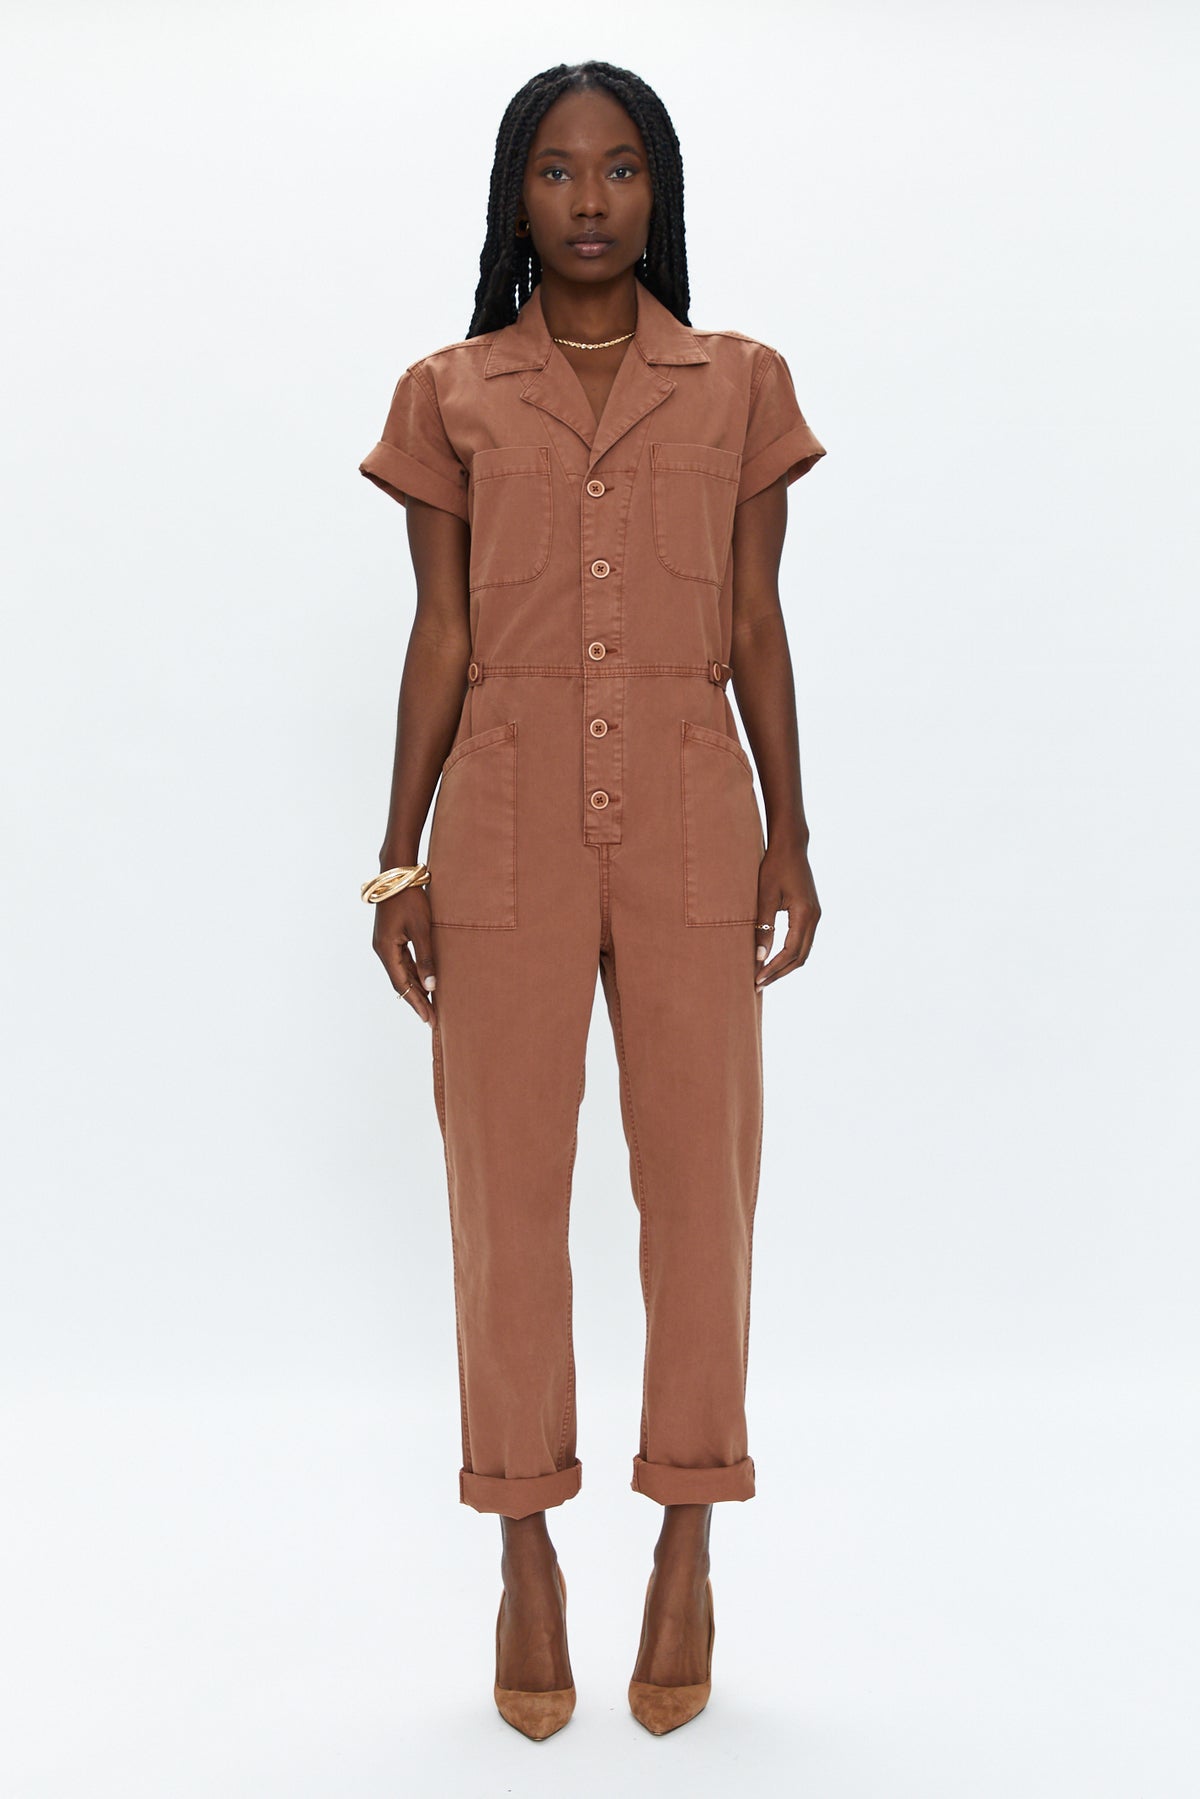 Grover Short Sleeve Field Suit - Cinnamon
            
              Sale